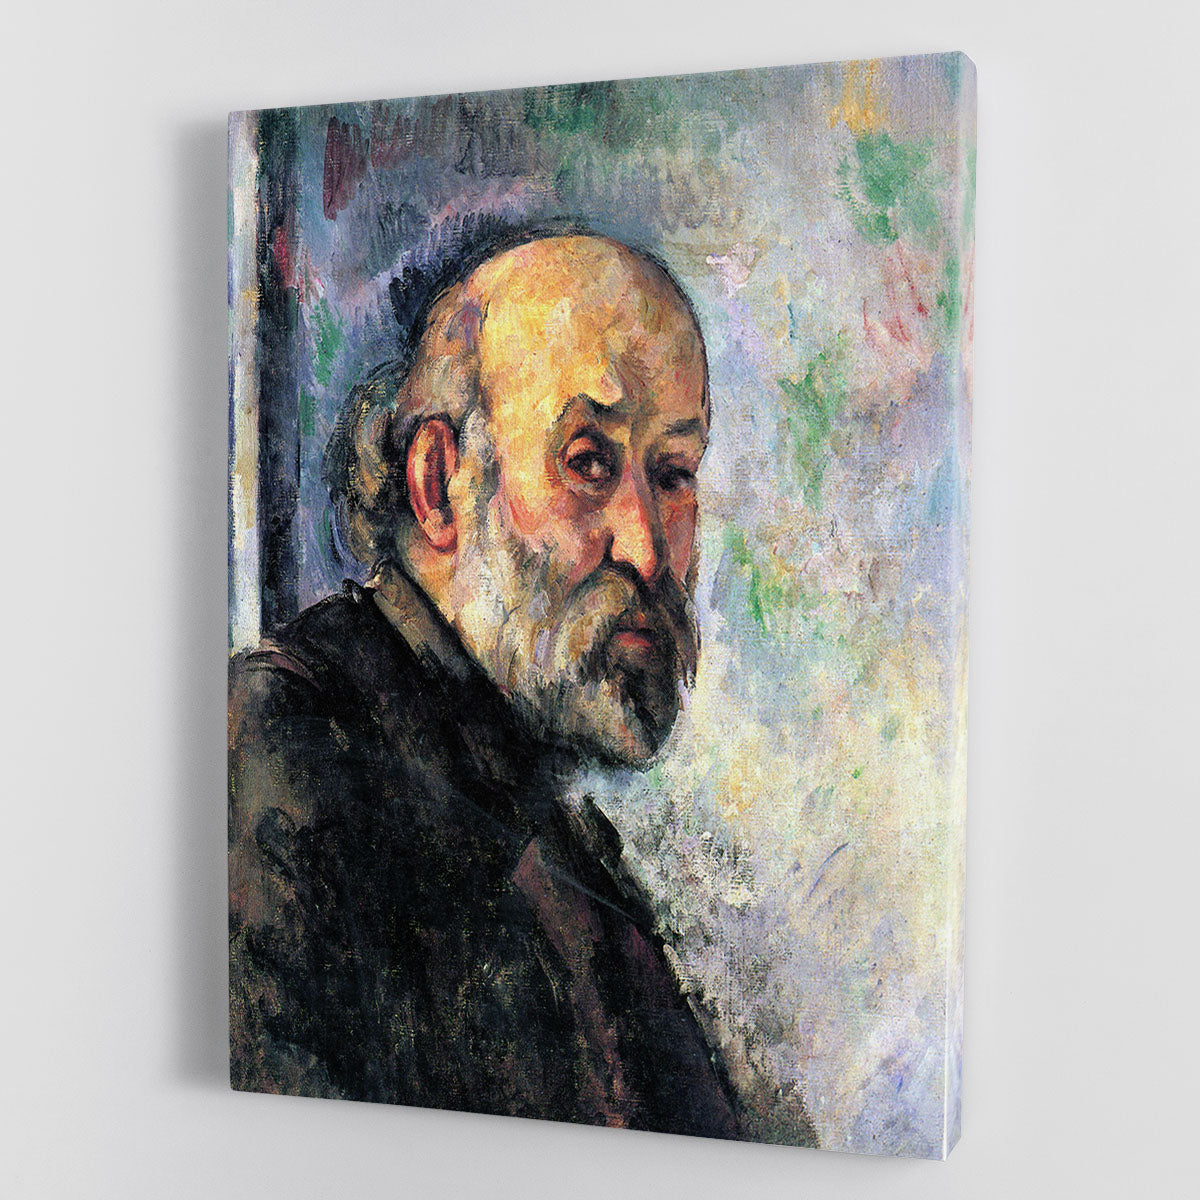 Self Portrait #4 by Cezanne Canvas Print or Poster - Canvas Art Rocks - 1